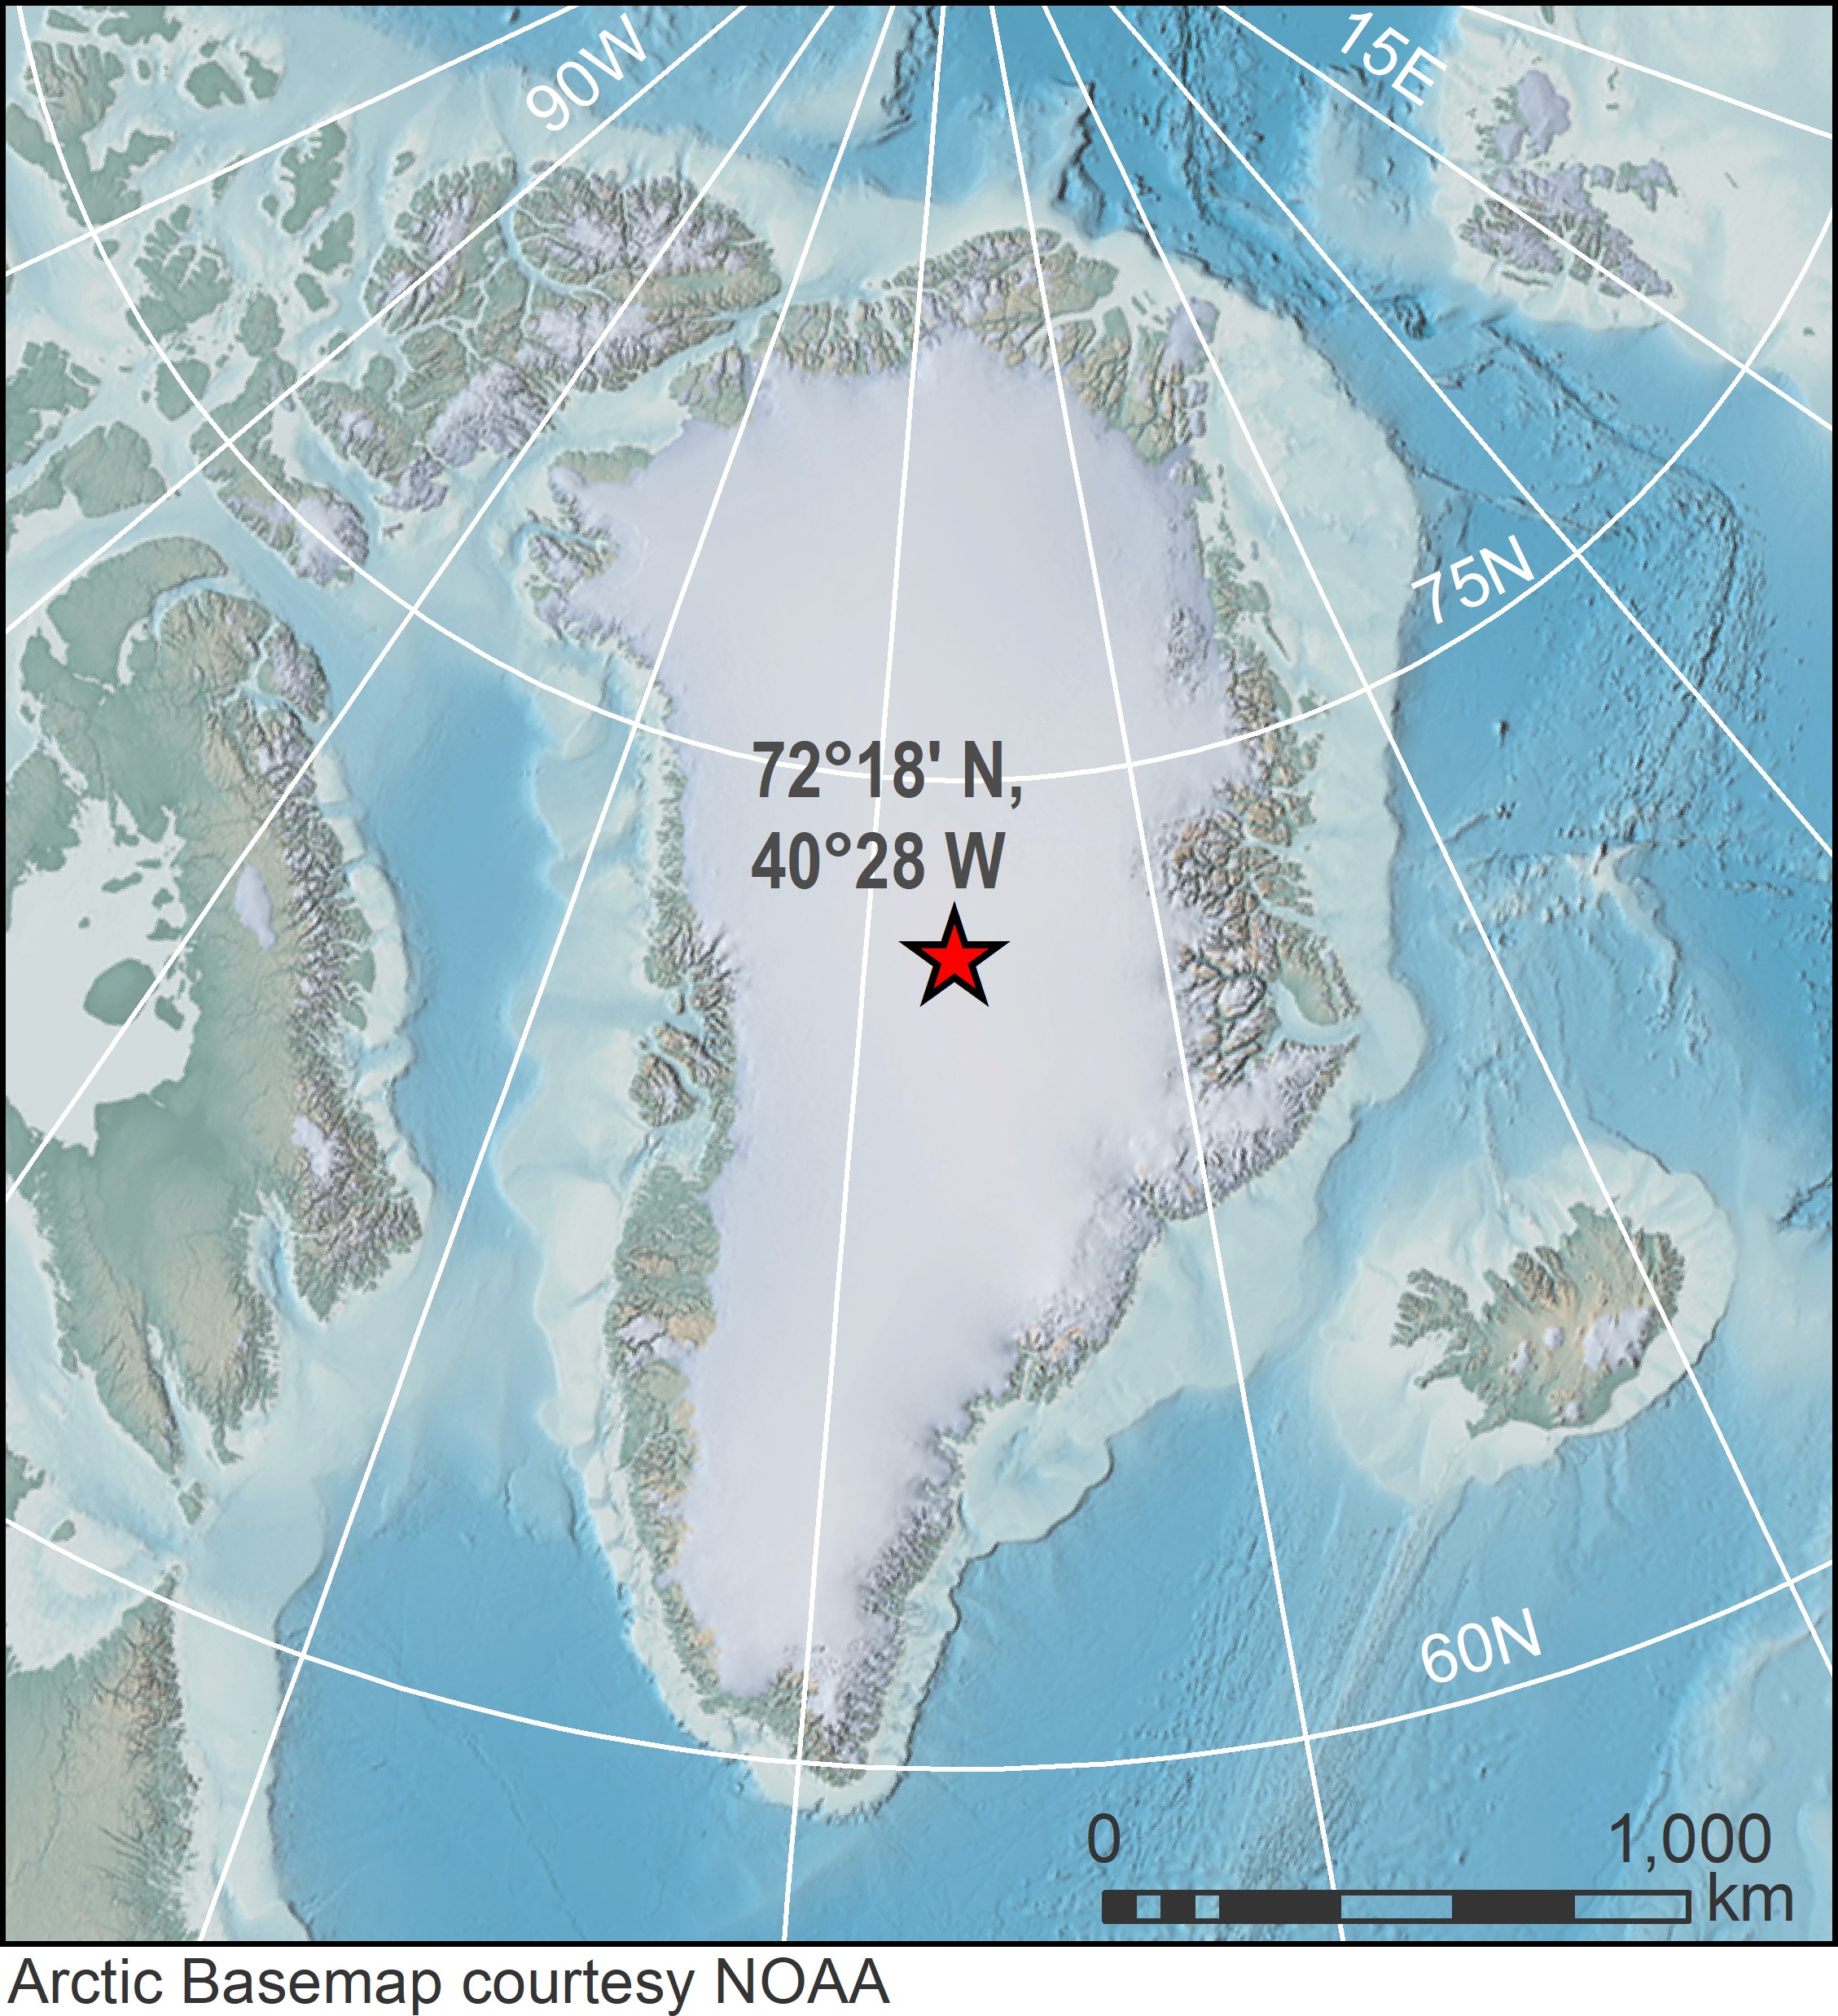 Arctic Basemap courtesy NOAA